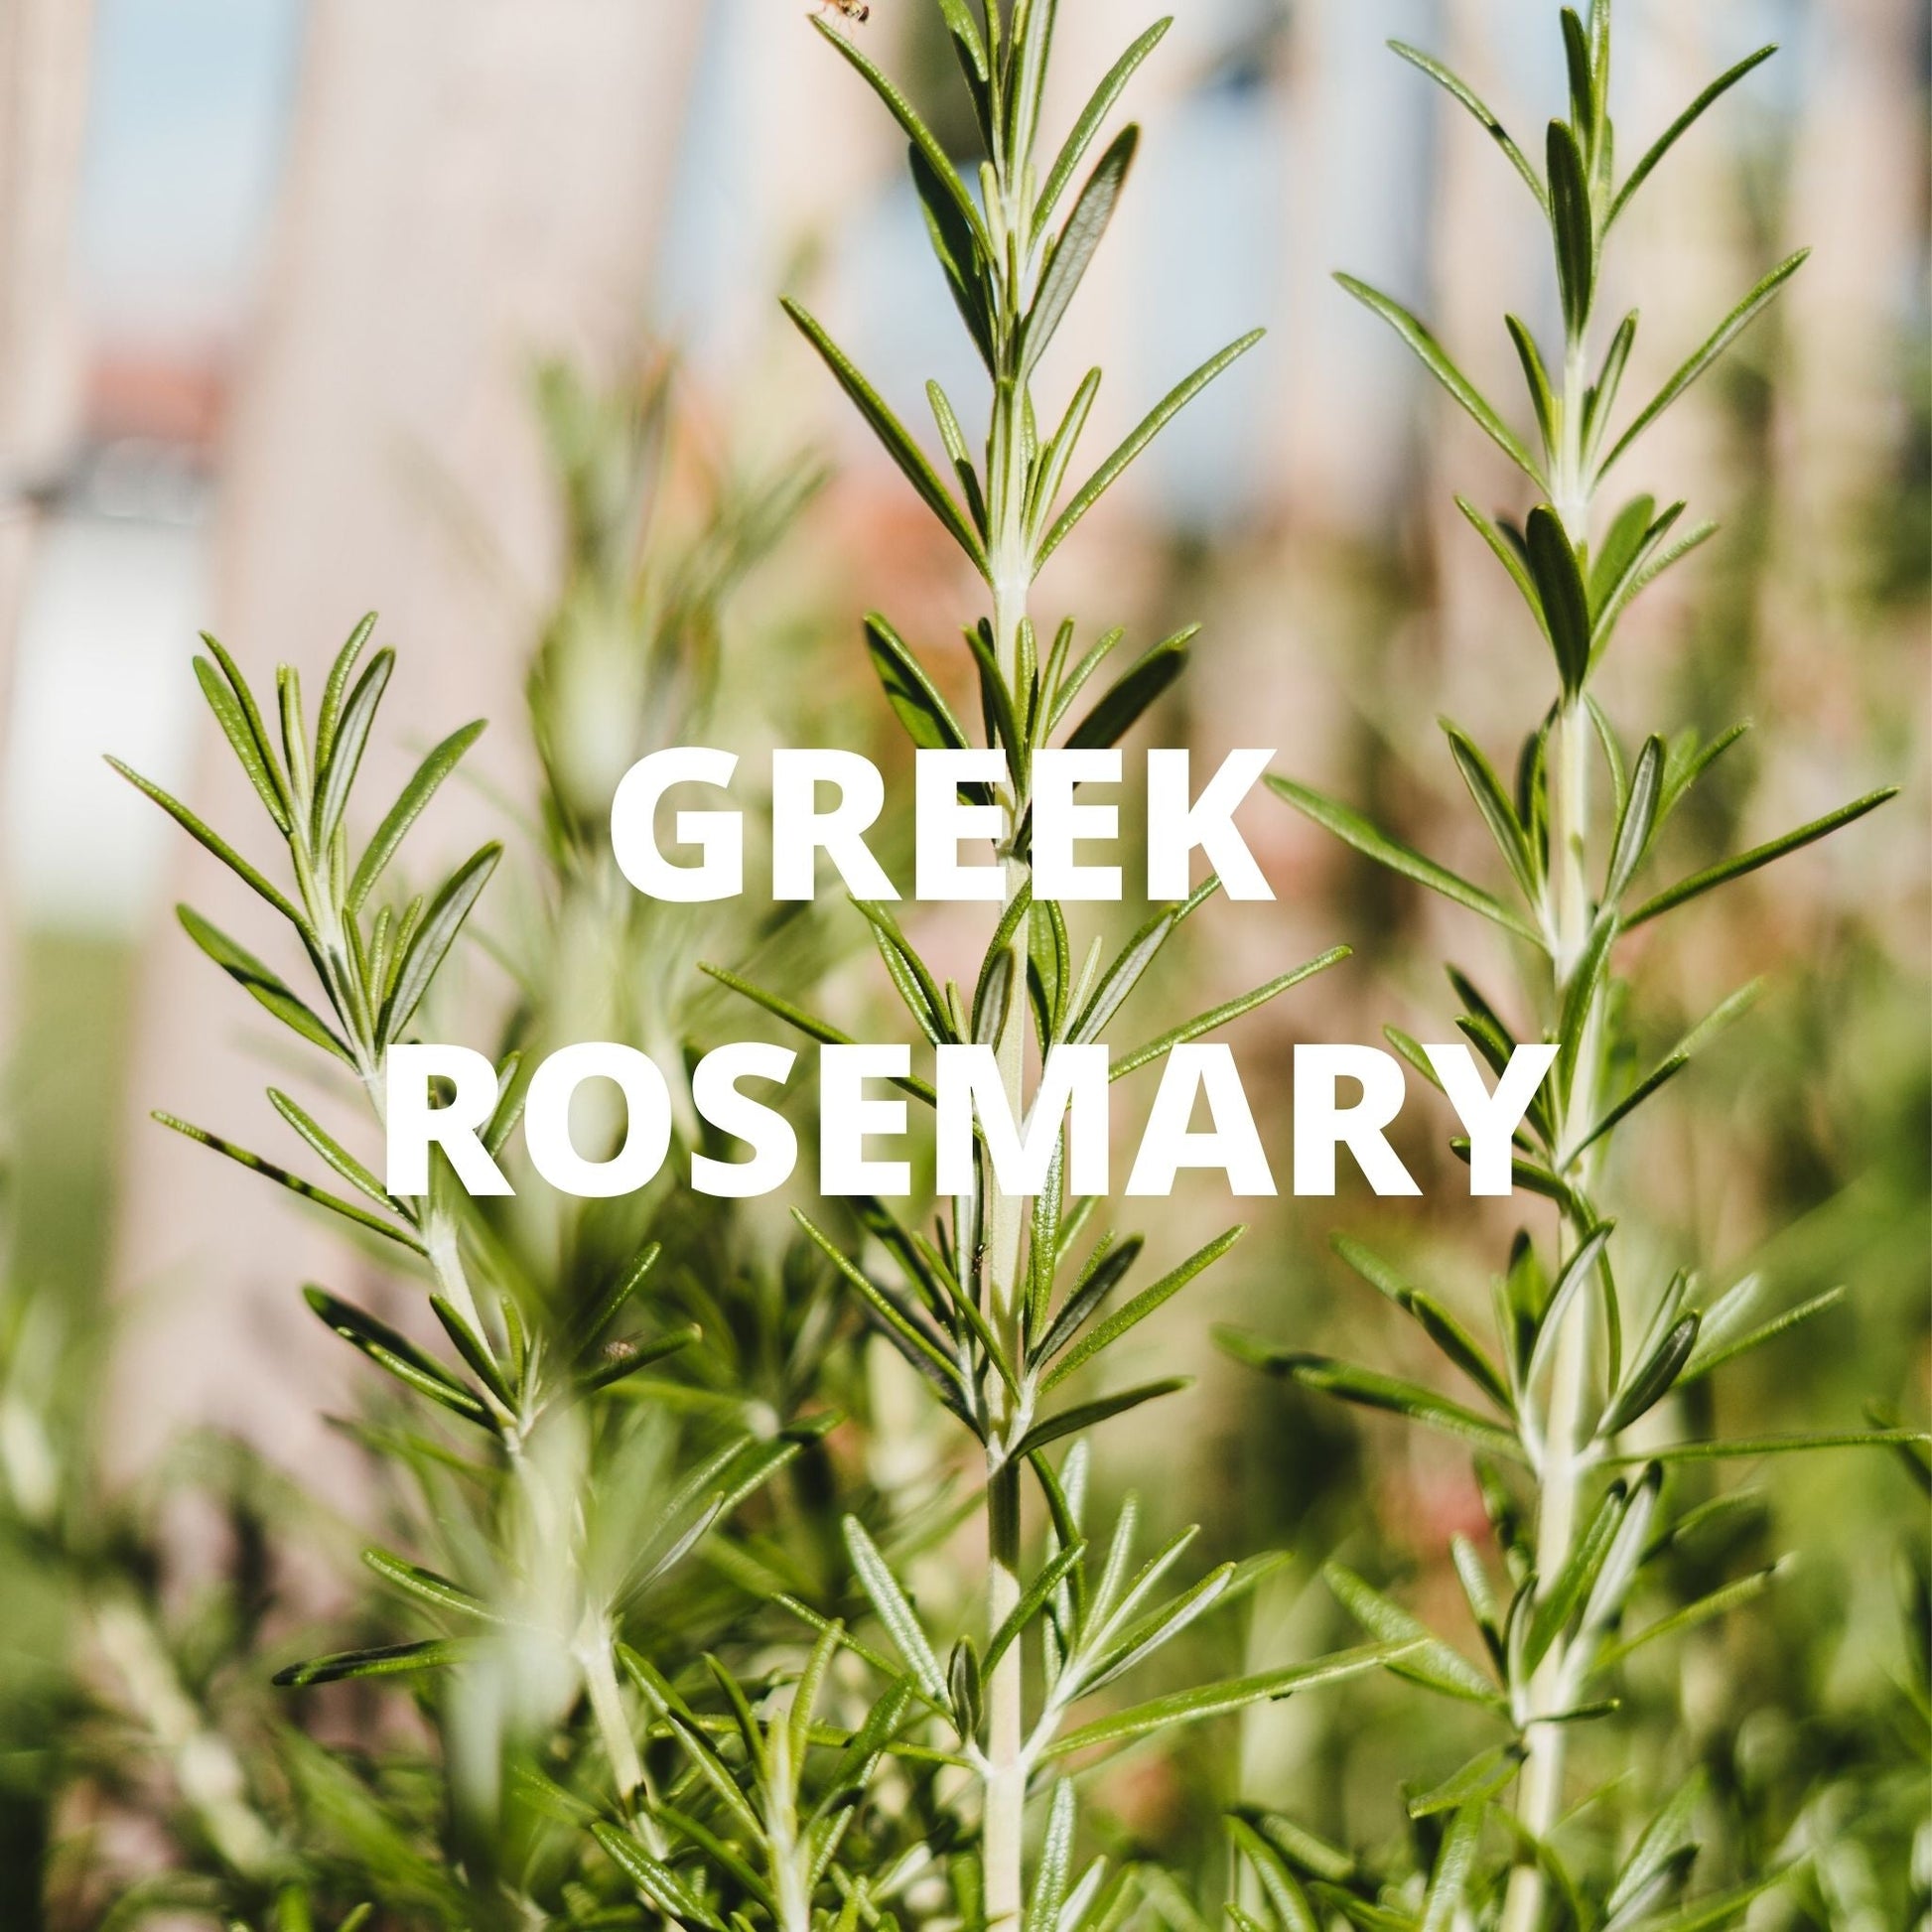 Greek rosemary